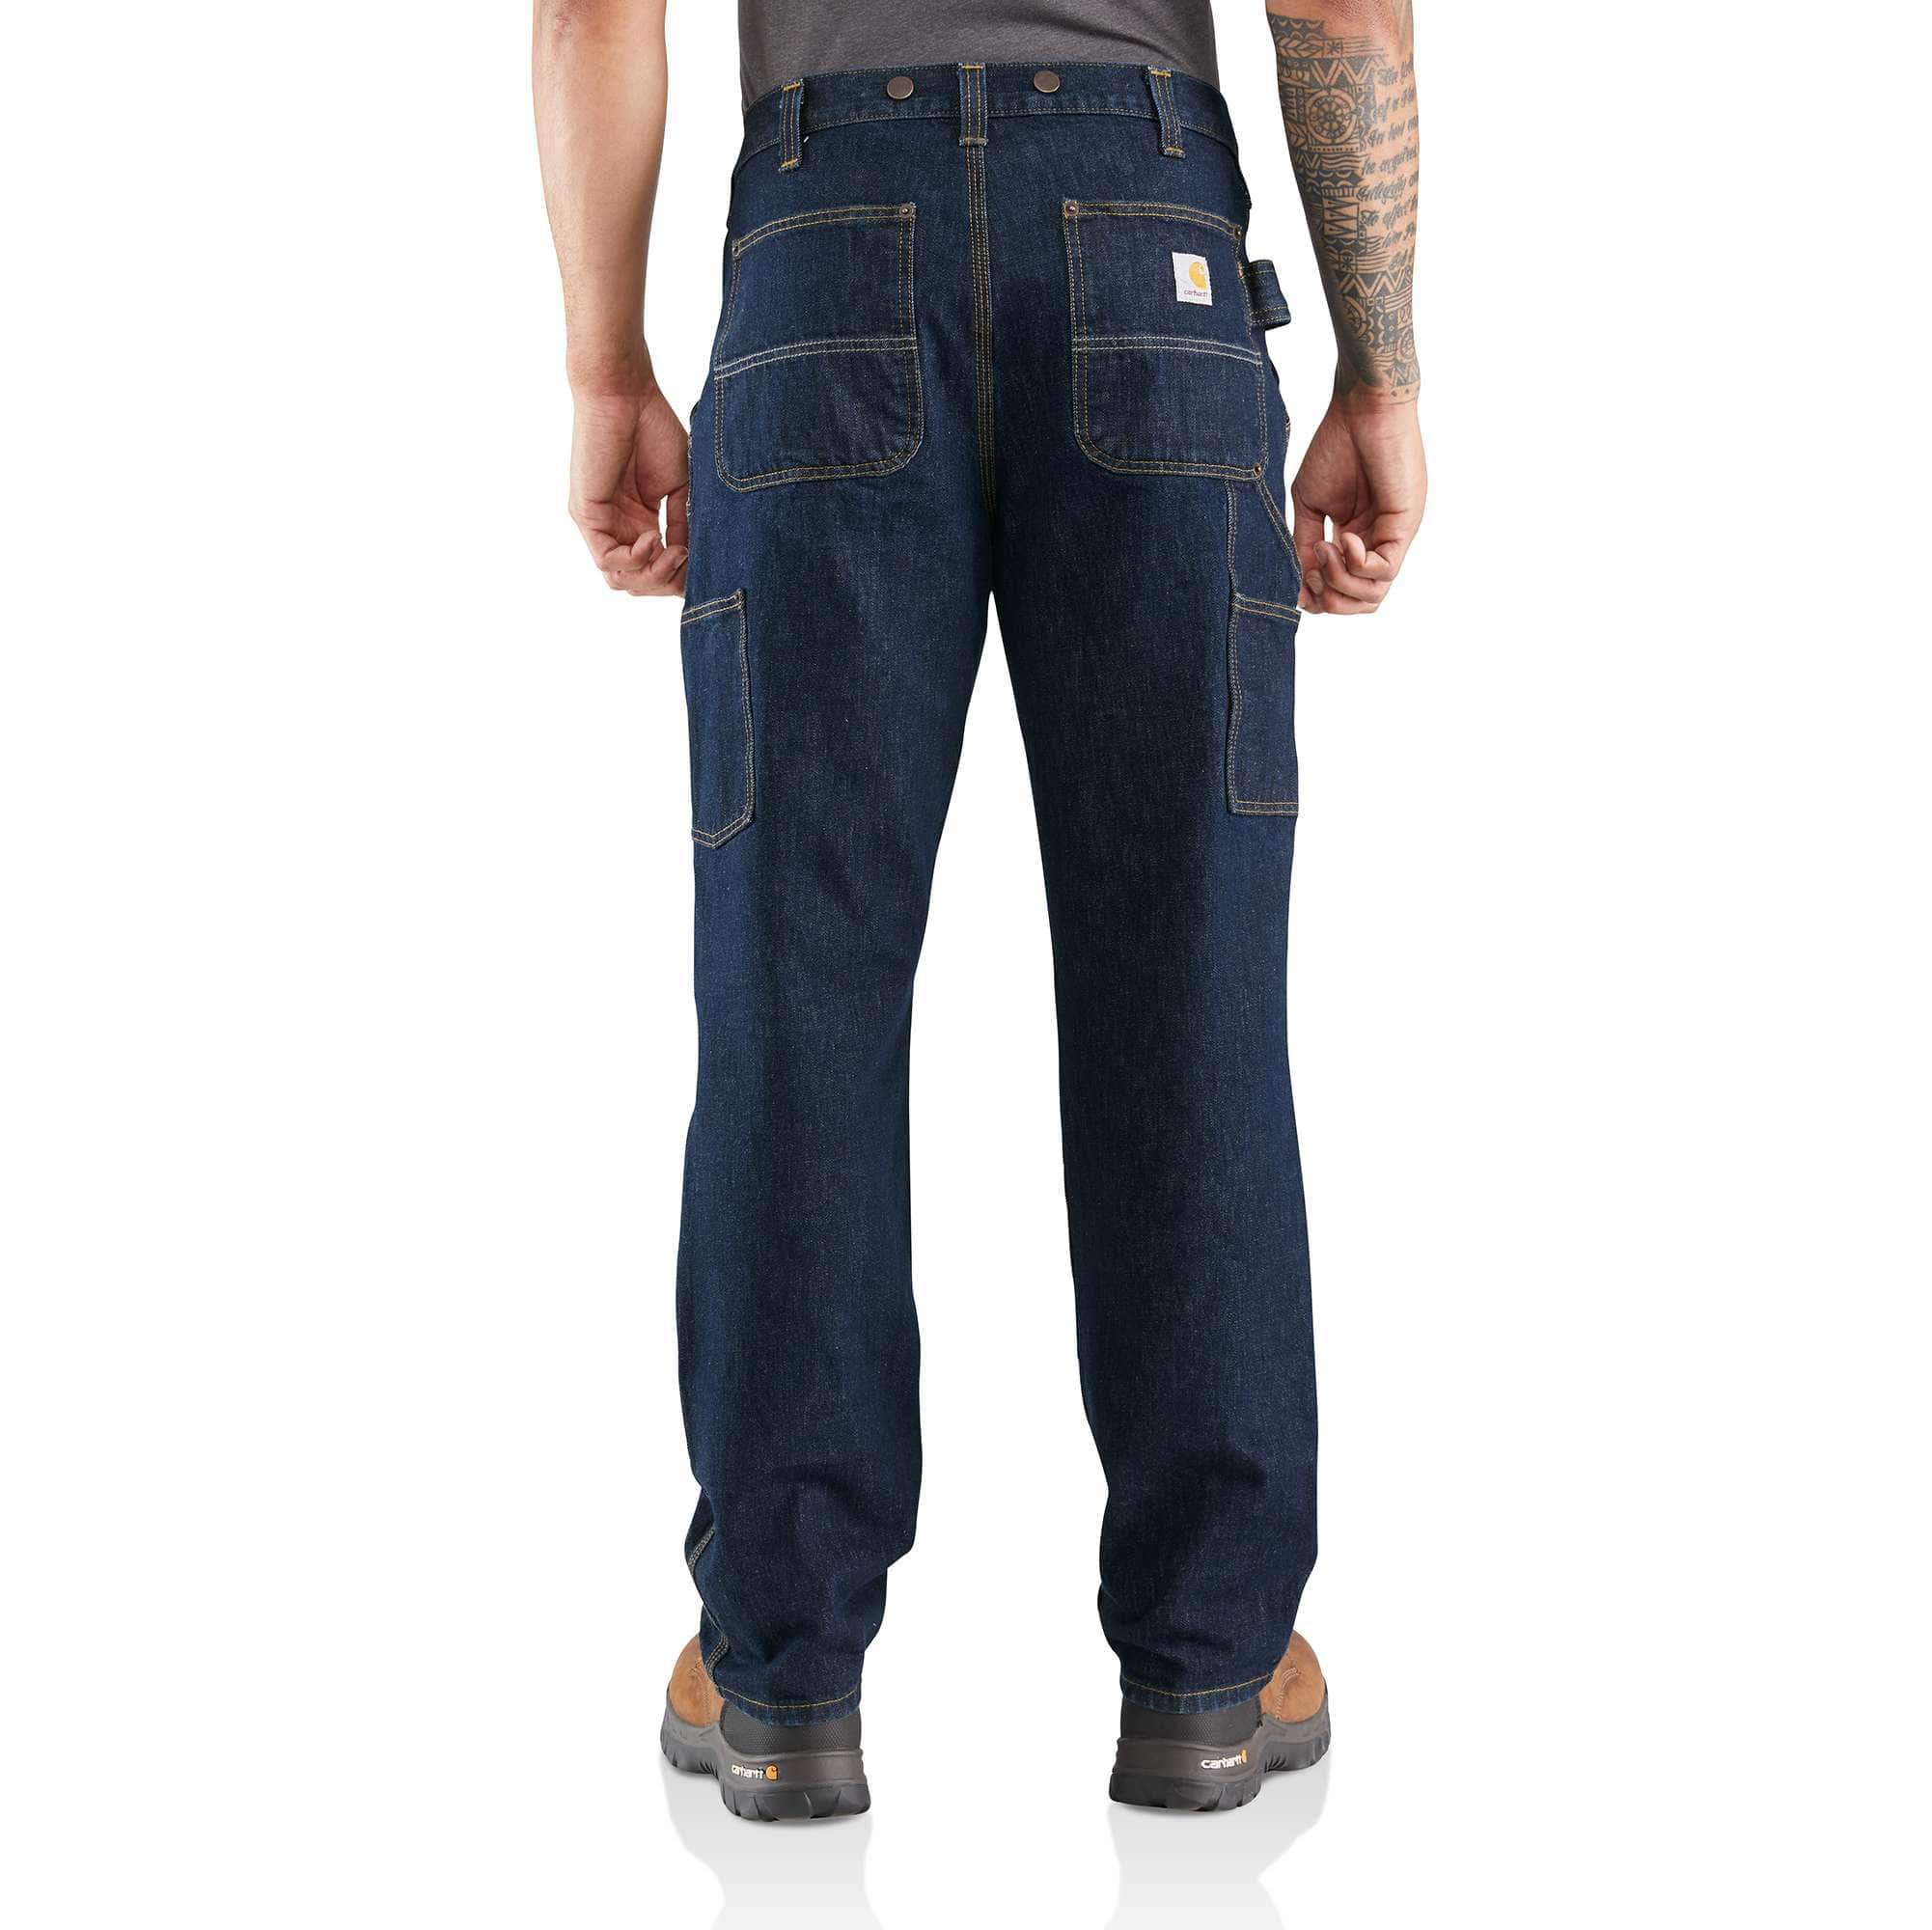 best price on carhartt jeans